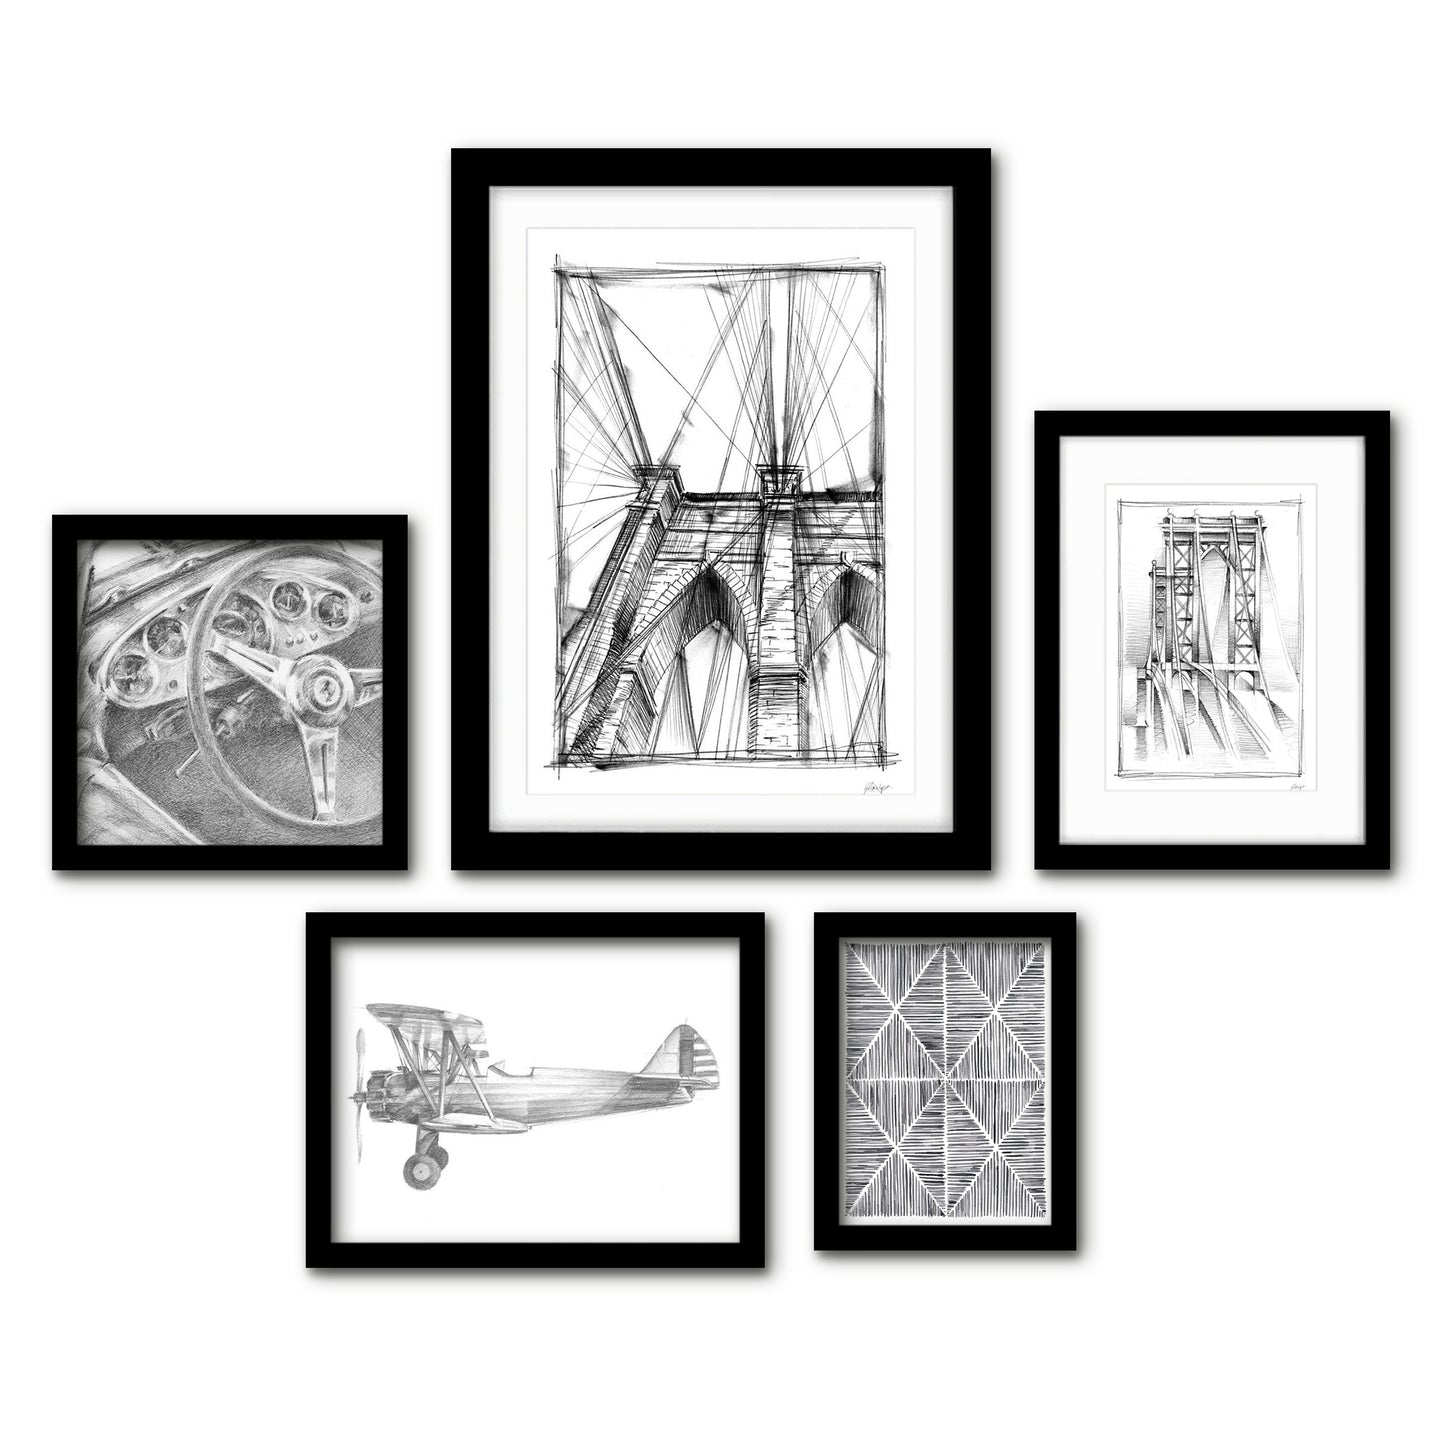 Americanflat 5 Piece Black Framed Gallery Wall Art Set - Black & White Drawn City & Transport